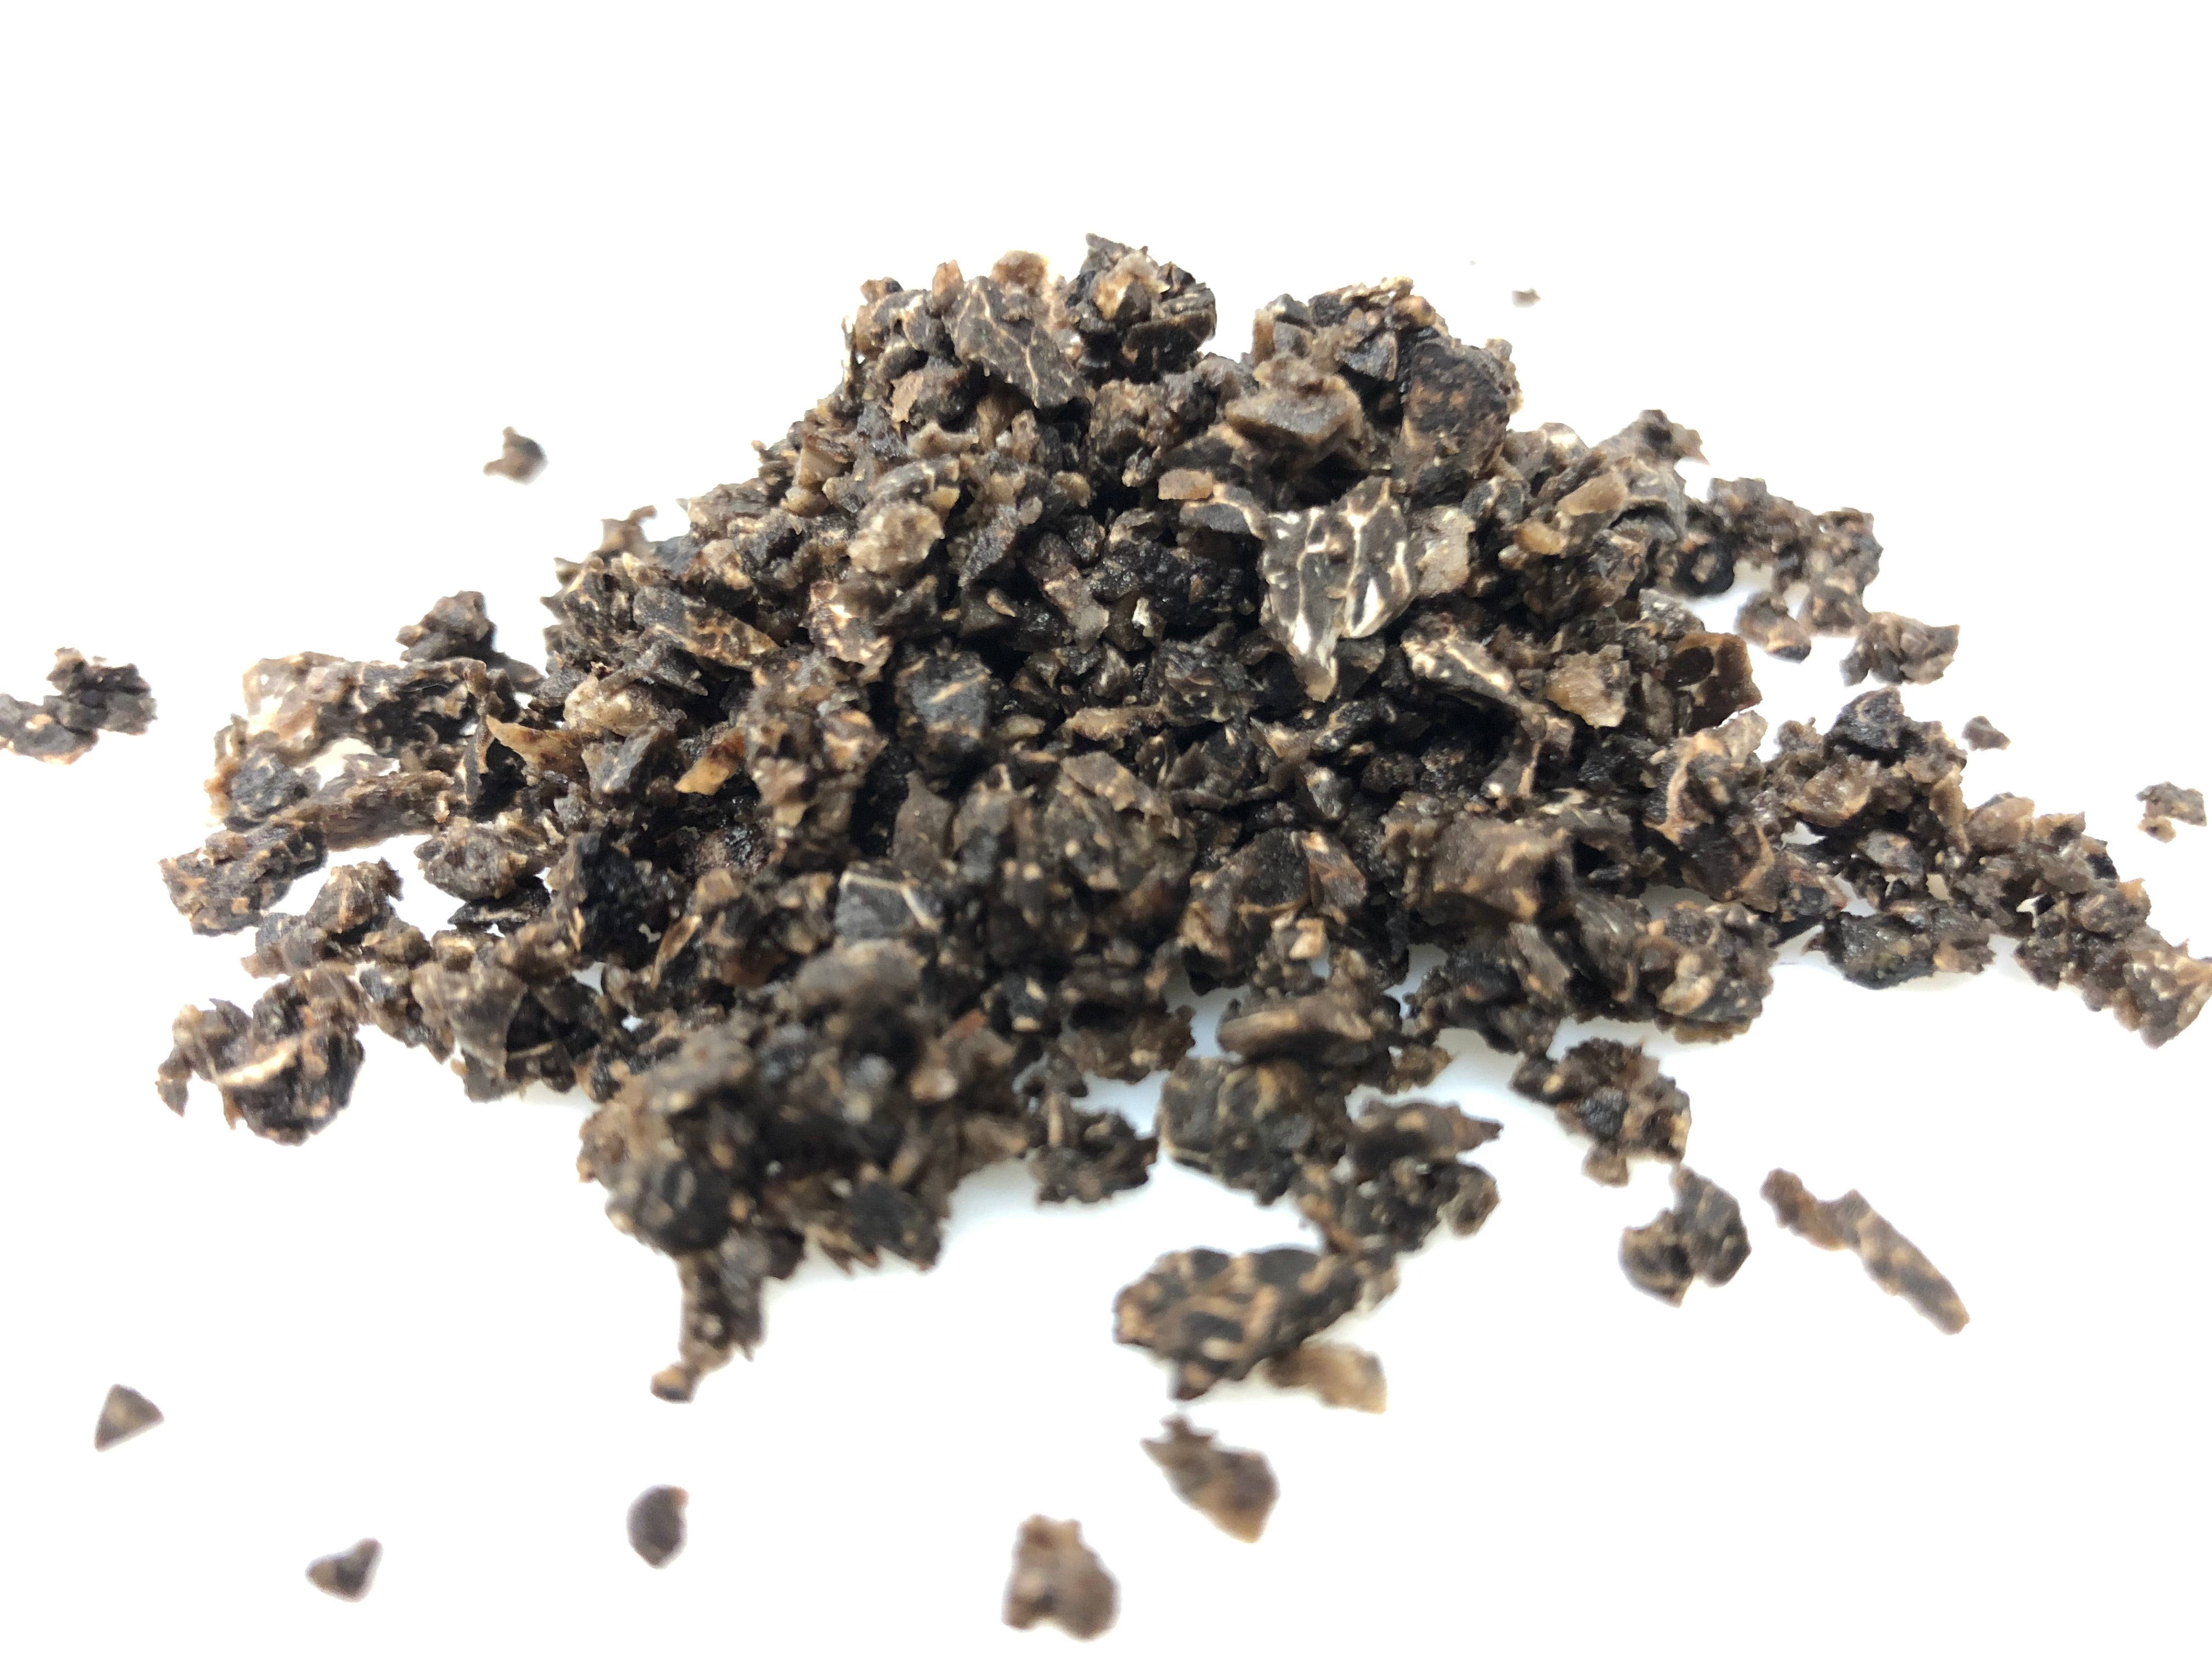 Truffe Noire fraîche en brisure « Tuber melanosporum »